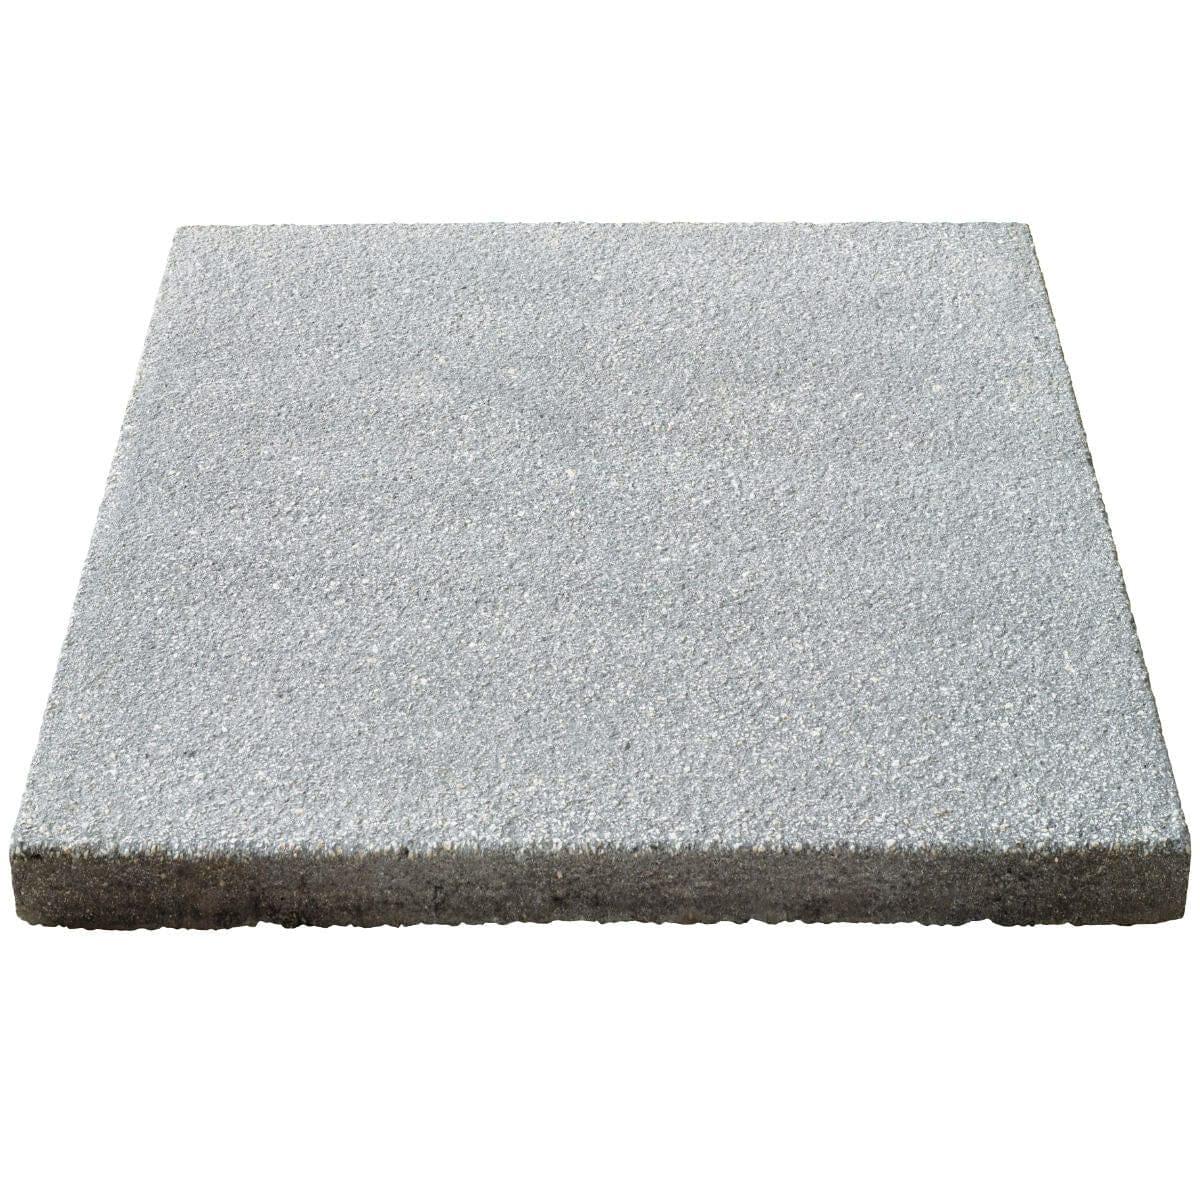 Brett Paving Concrete 'Chaucer' Charcoal textured paving slabs